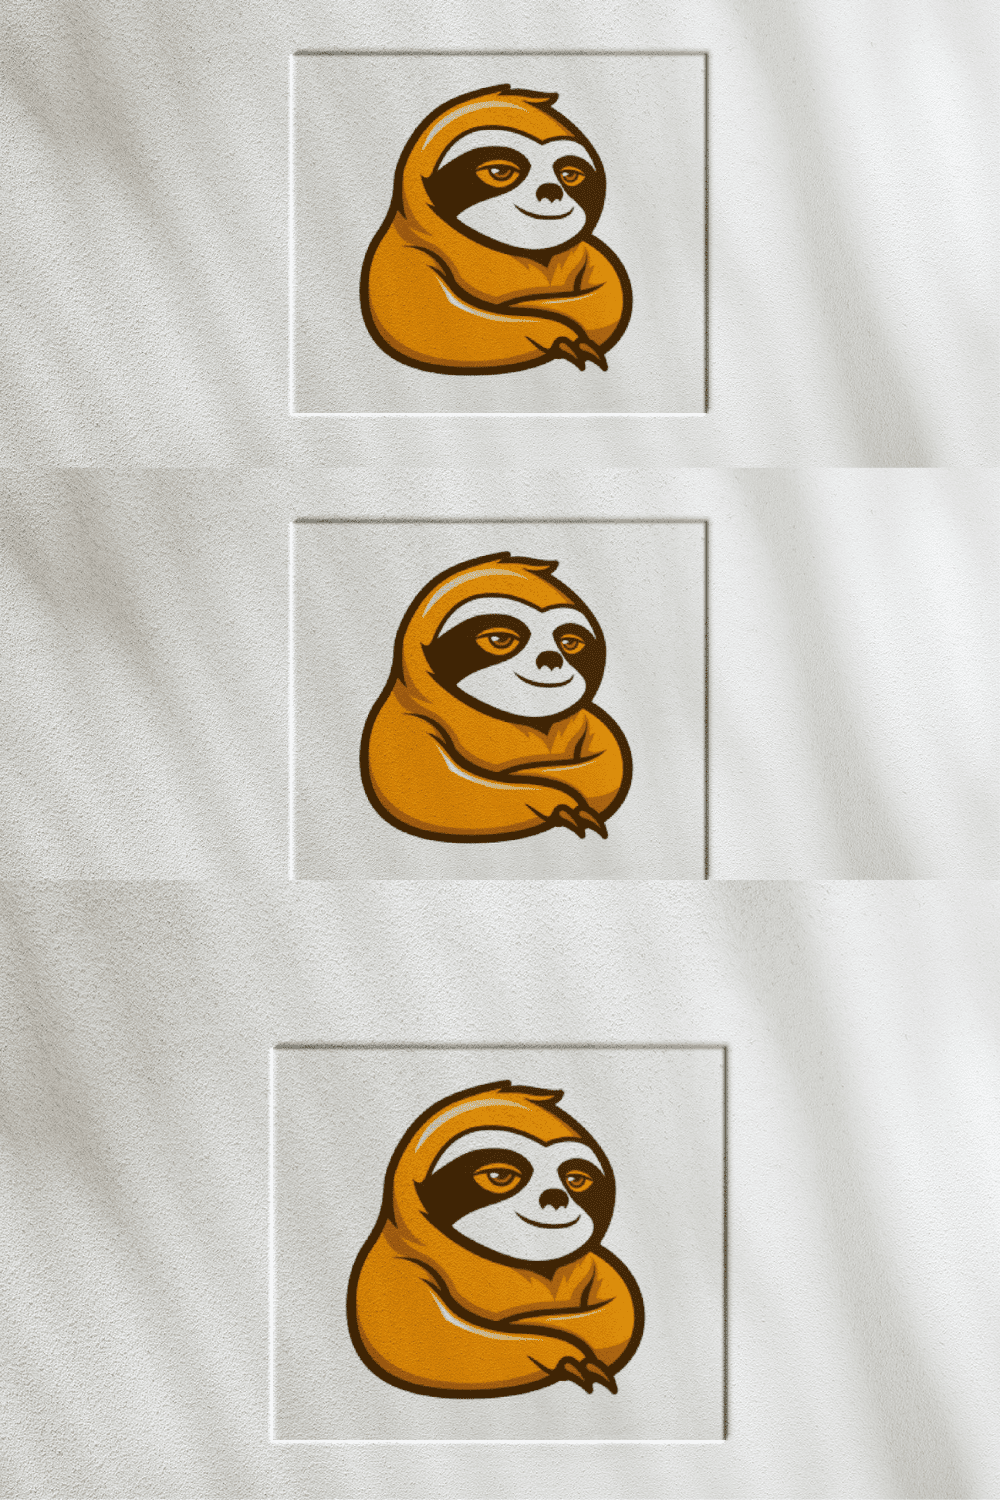 Sloth Logo pinterest preview image.